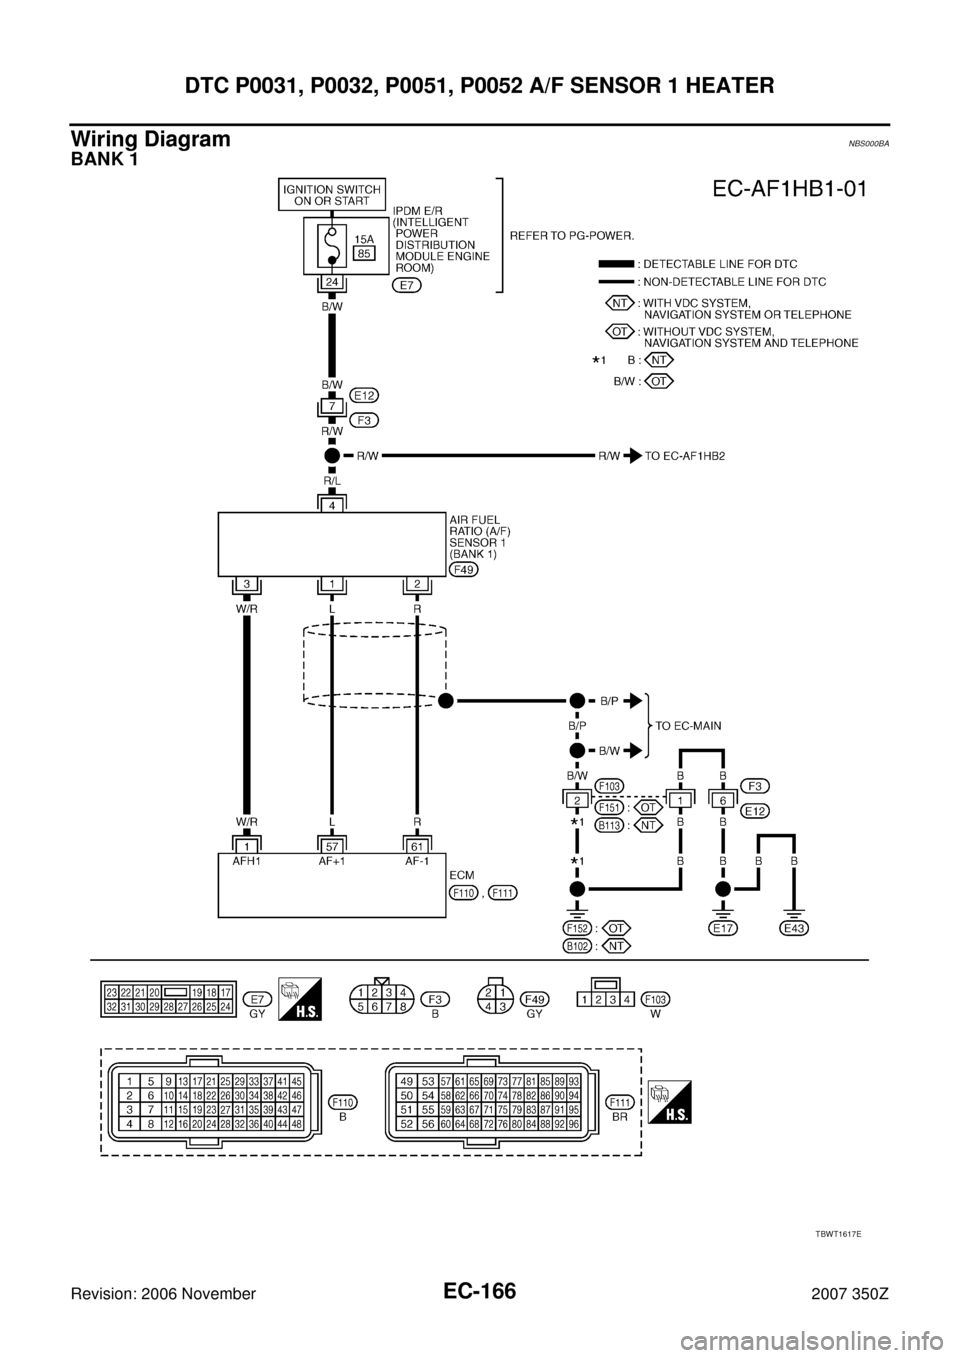 NISSAN 350Z 2007 Z33 Engine Control User Guide EC-166
DTC P0031, P0032, P0051, P0052 A/F SENSOR 1 HEATER
Revision: 2006 November2007 350Z
Wiring DiagramNBS000BA
BANK 1
TBWT1617E 